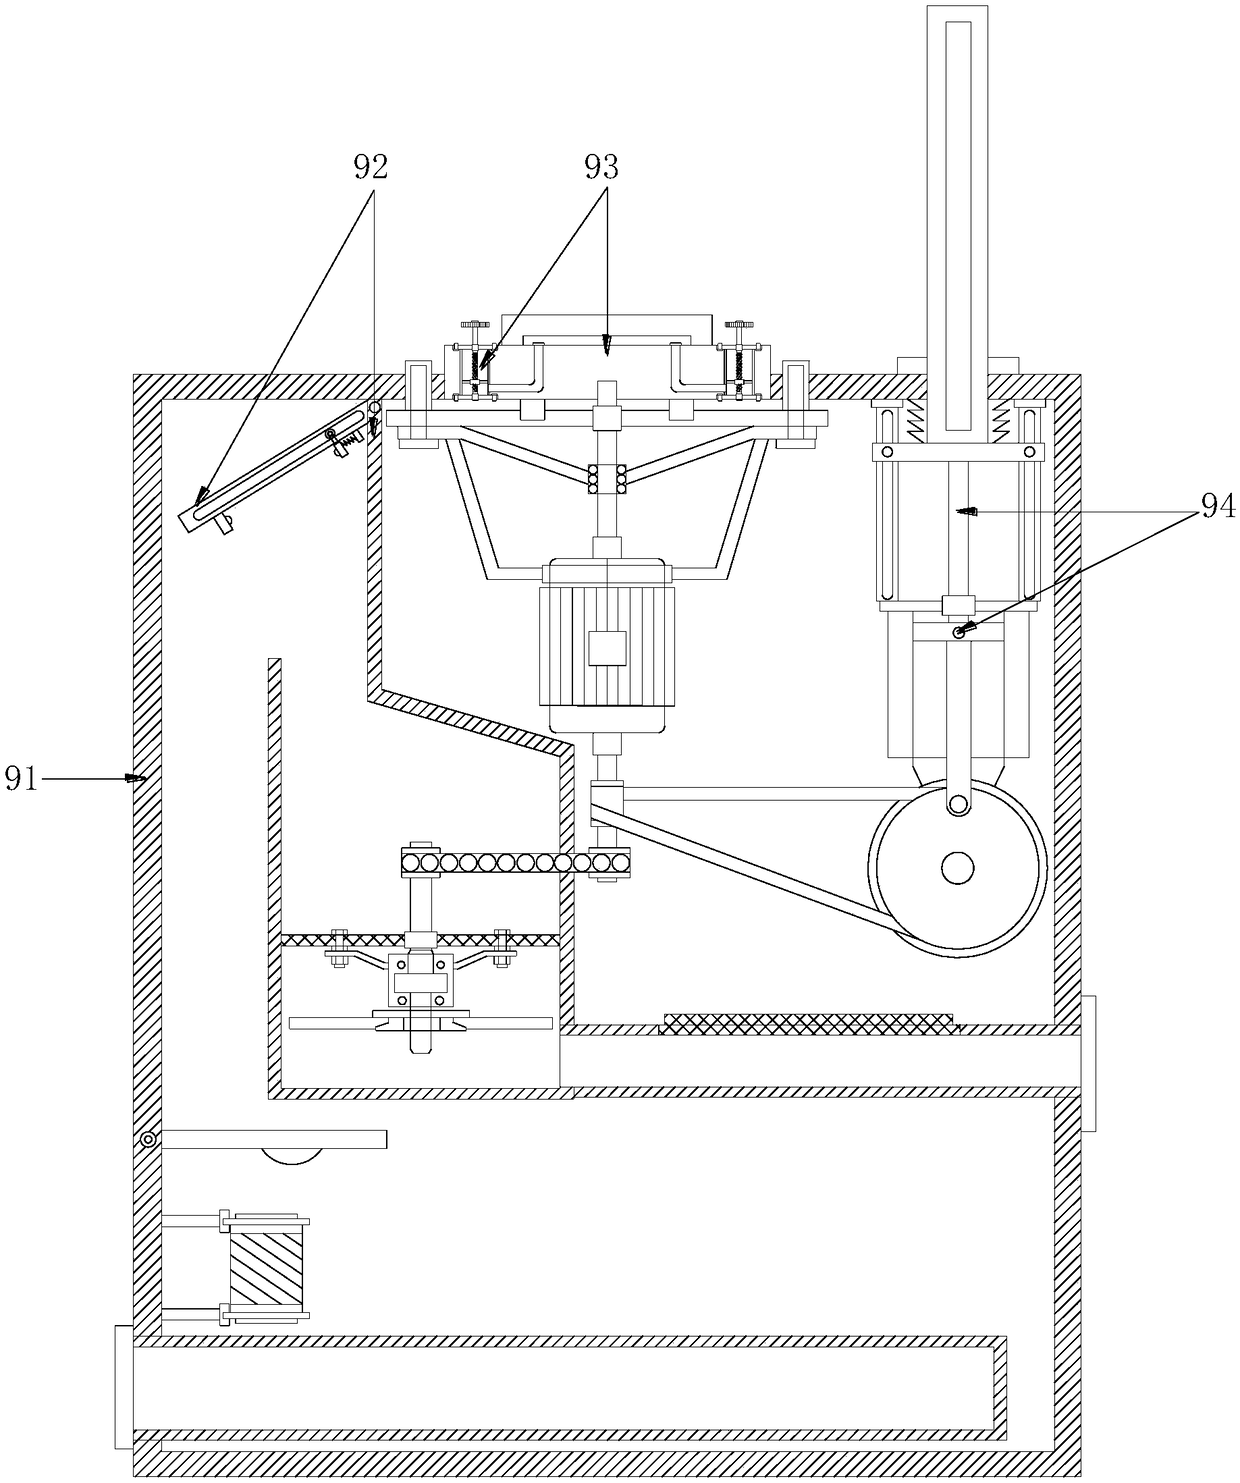 Machining device for machining tool